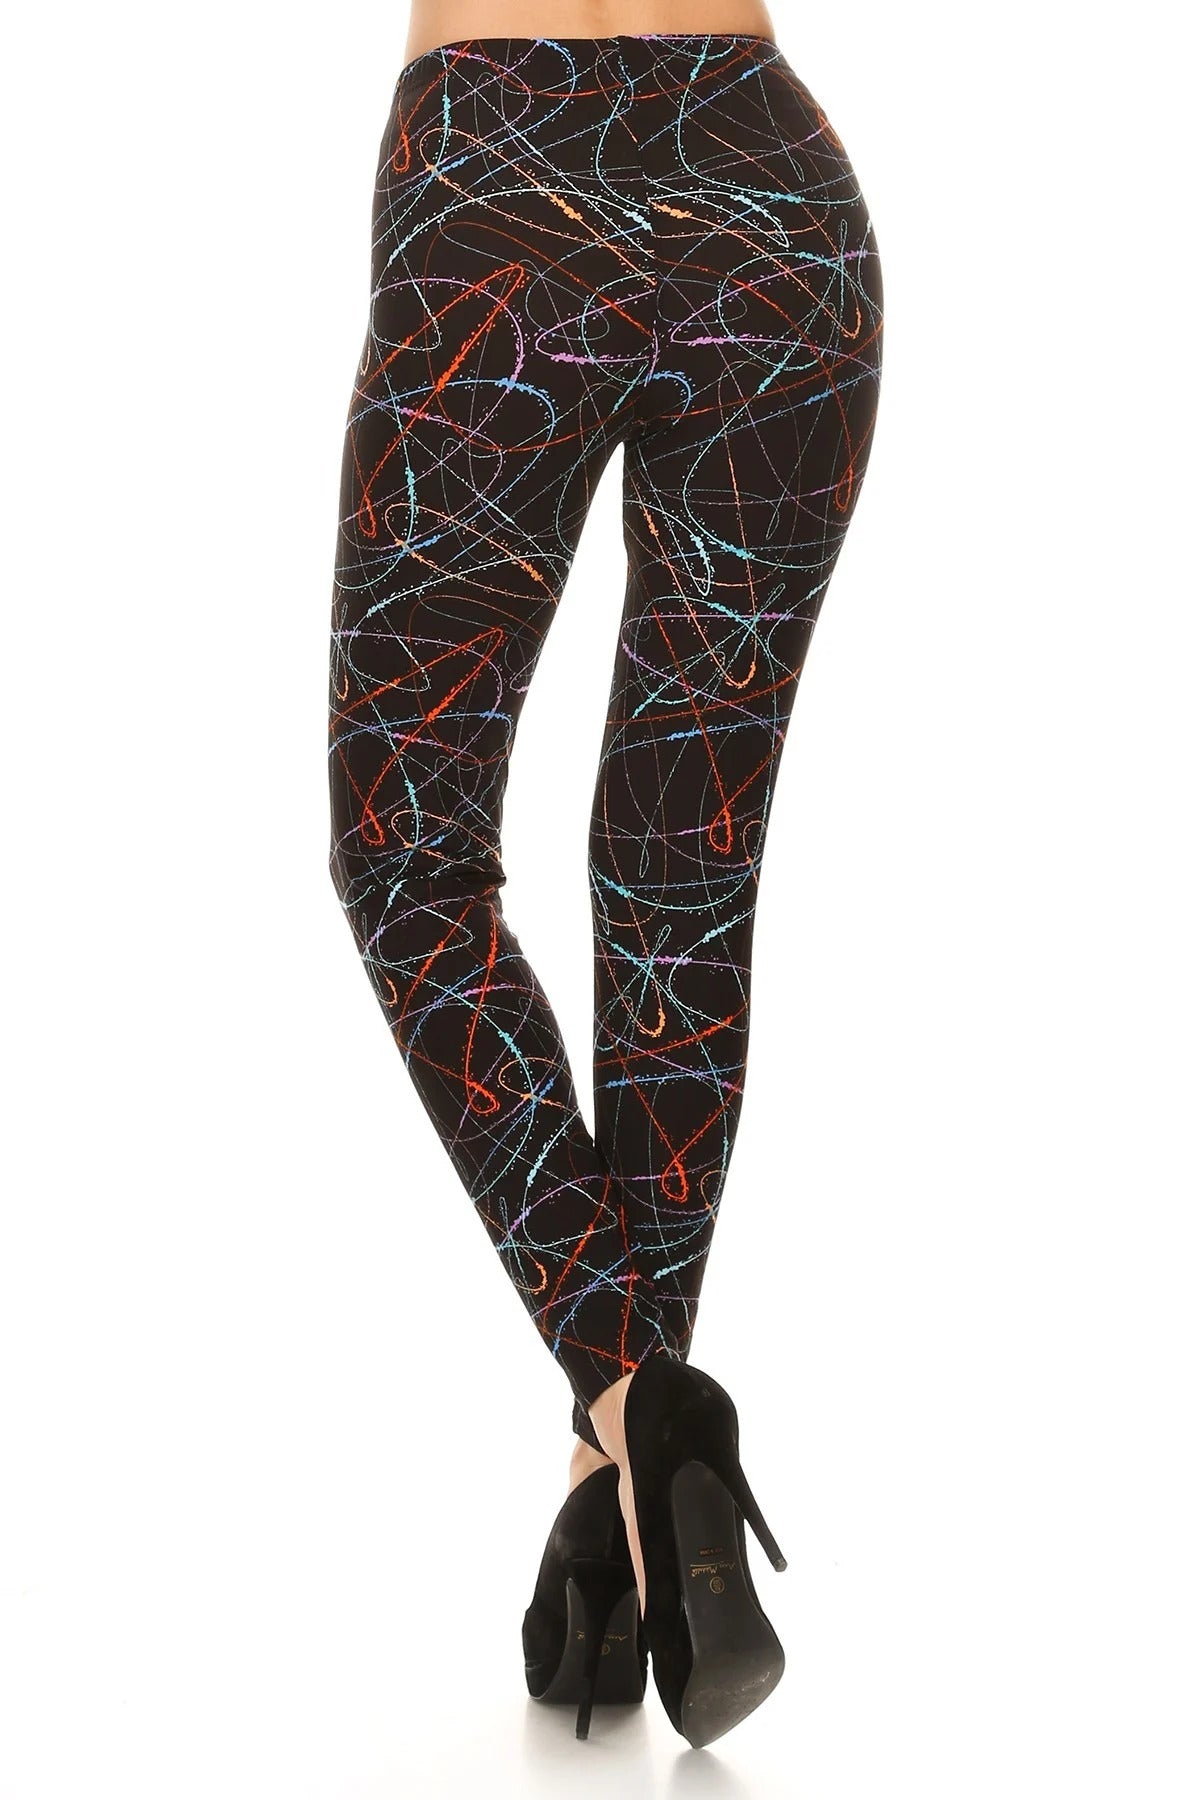 FZ Women's Multicolored Scribble Print, High Waisted Leggings